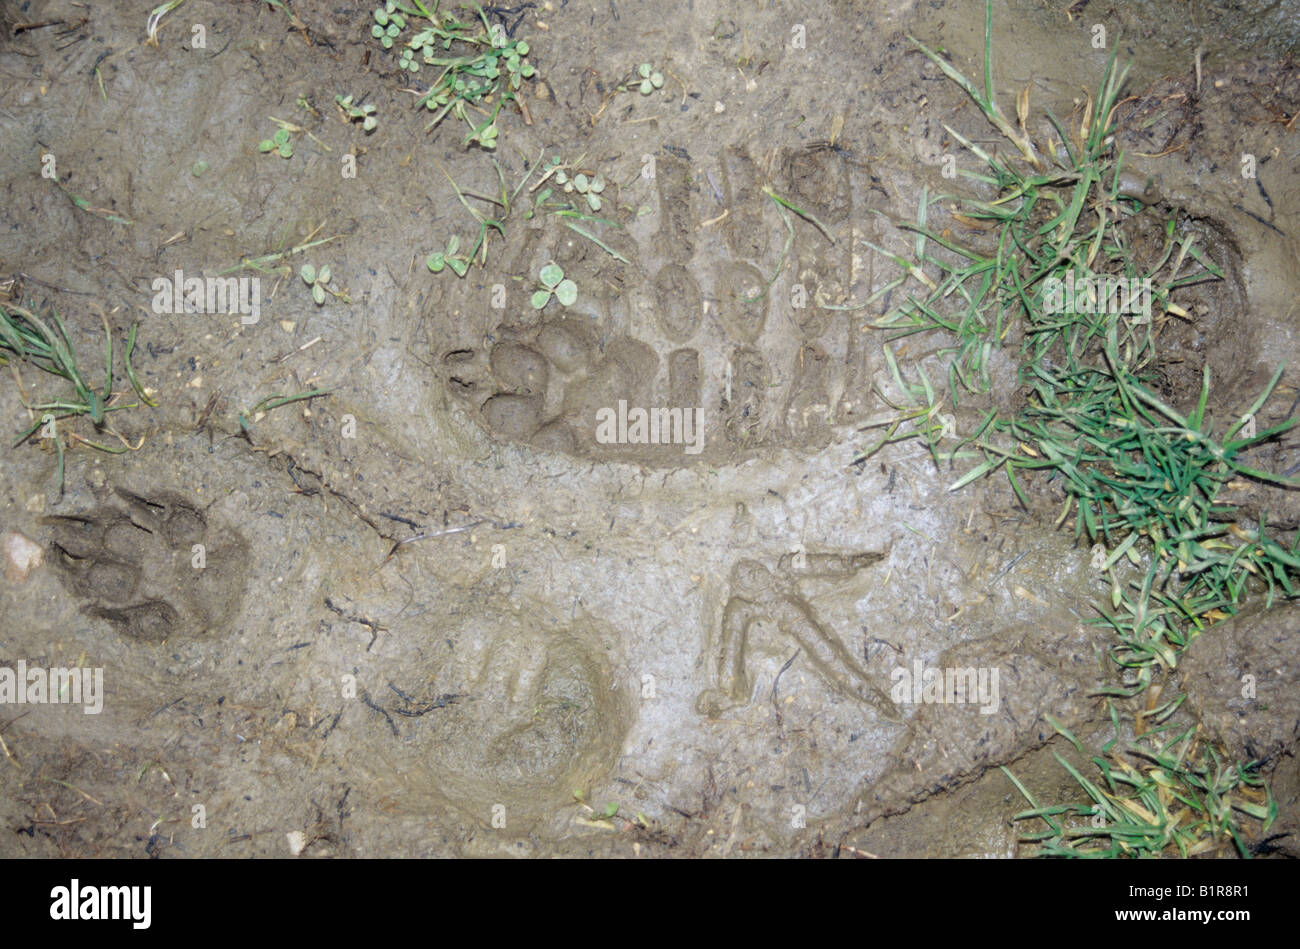 Footprints & Animal Tracks in Mud. Stock Photo